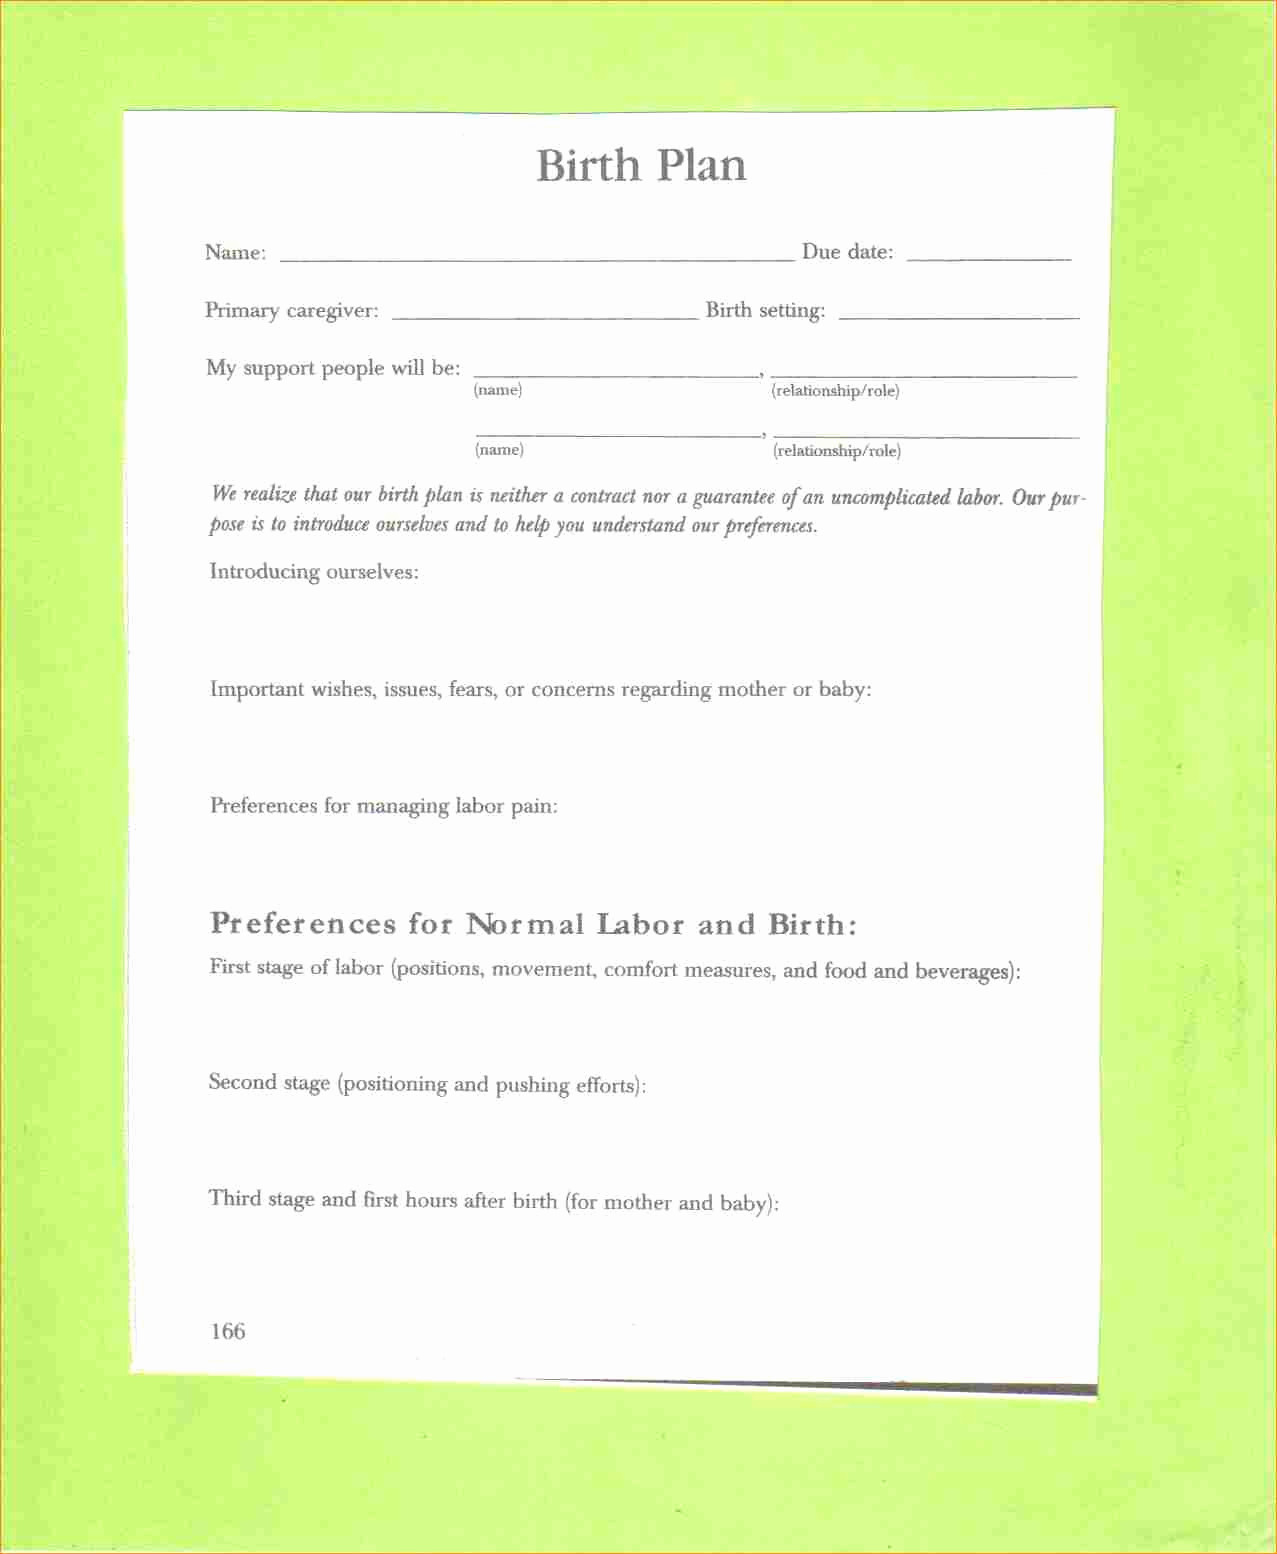 010 Or Section Birth Plan Worksheets Shocking C